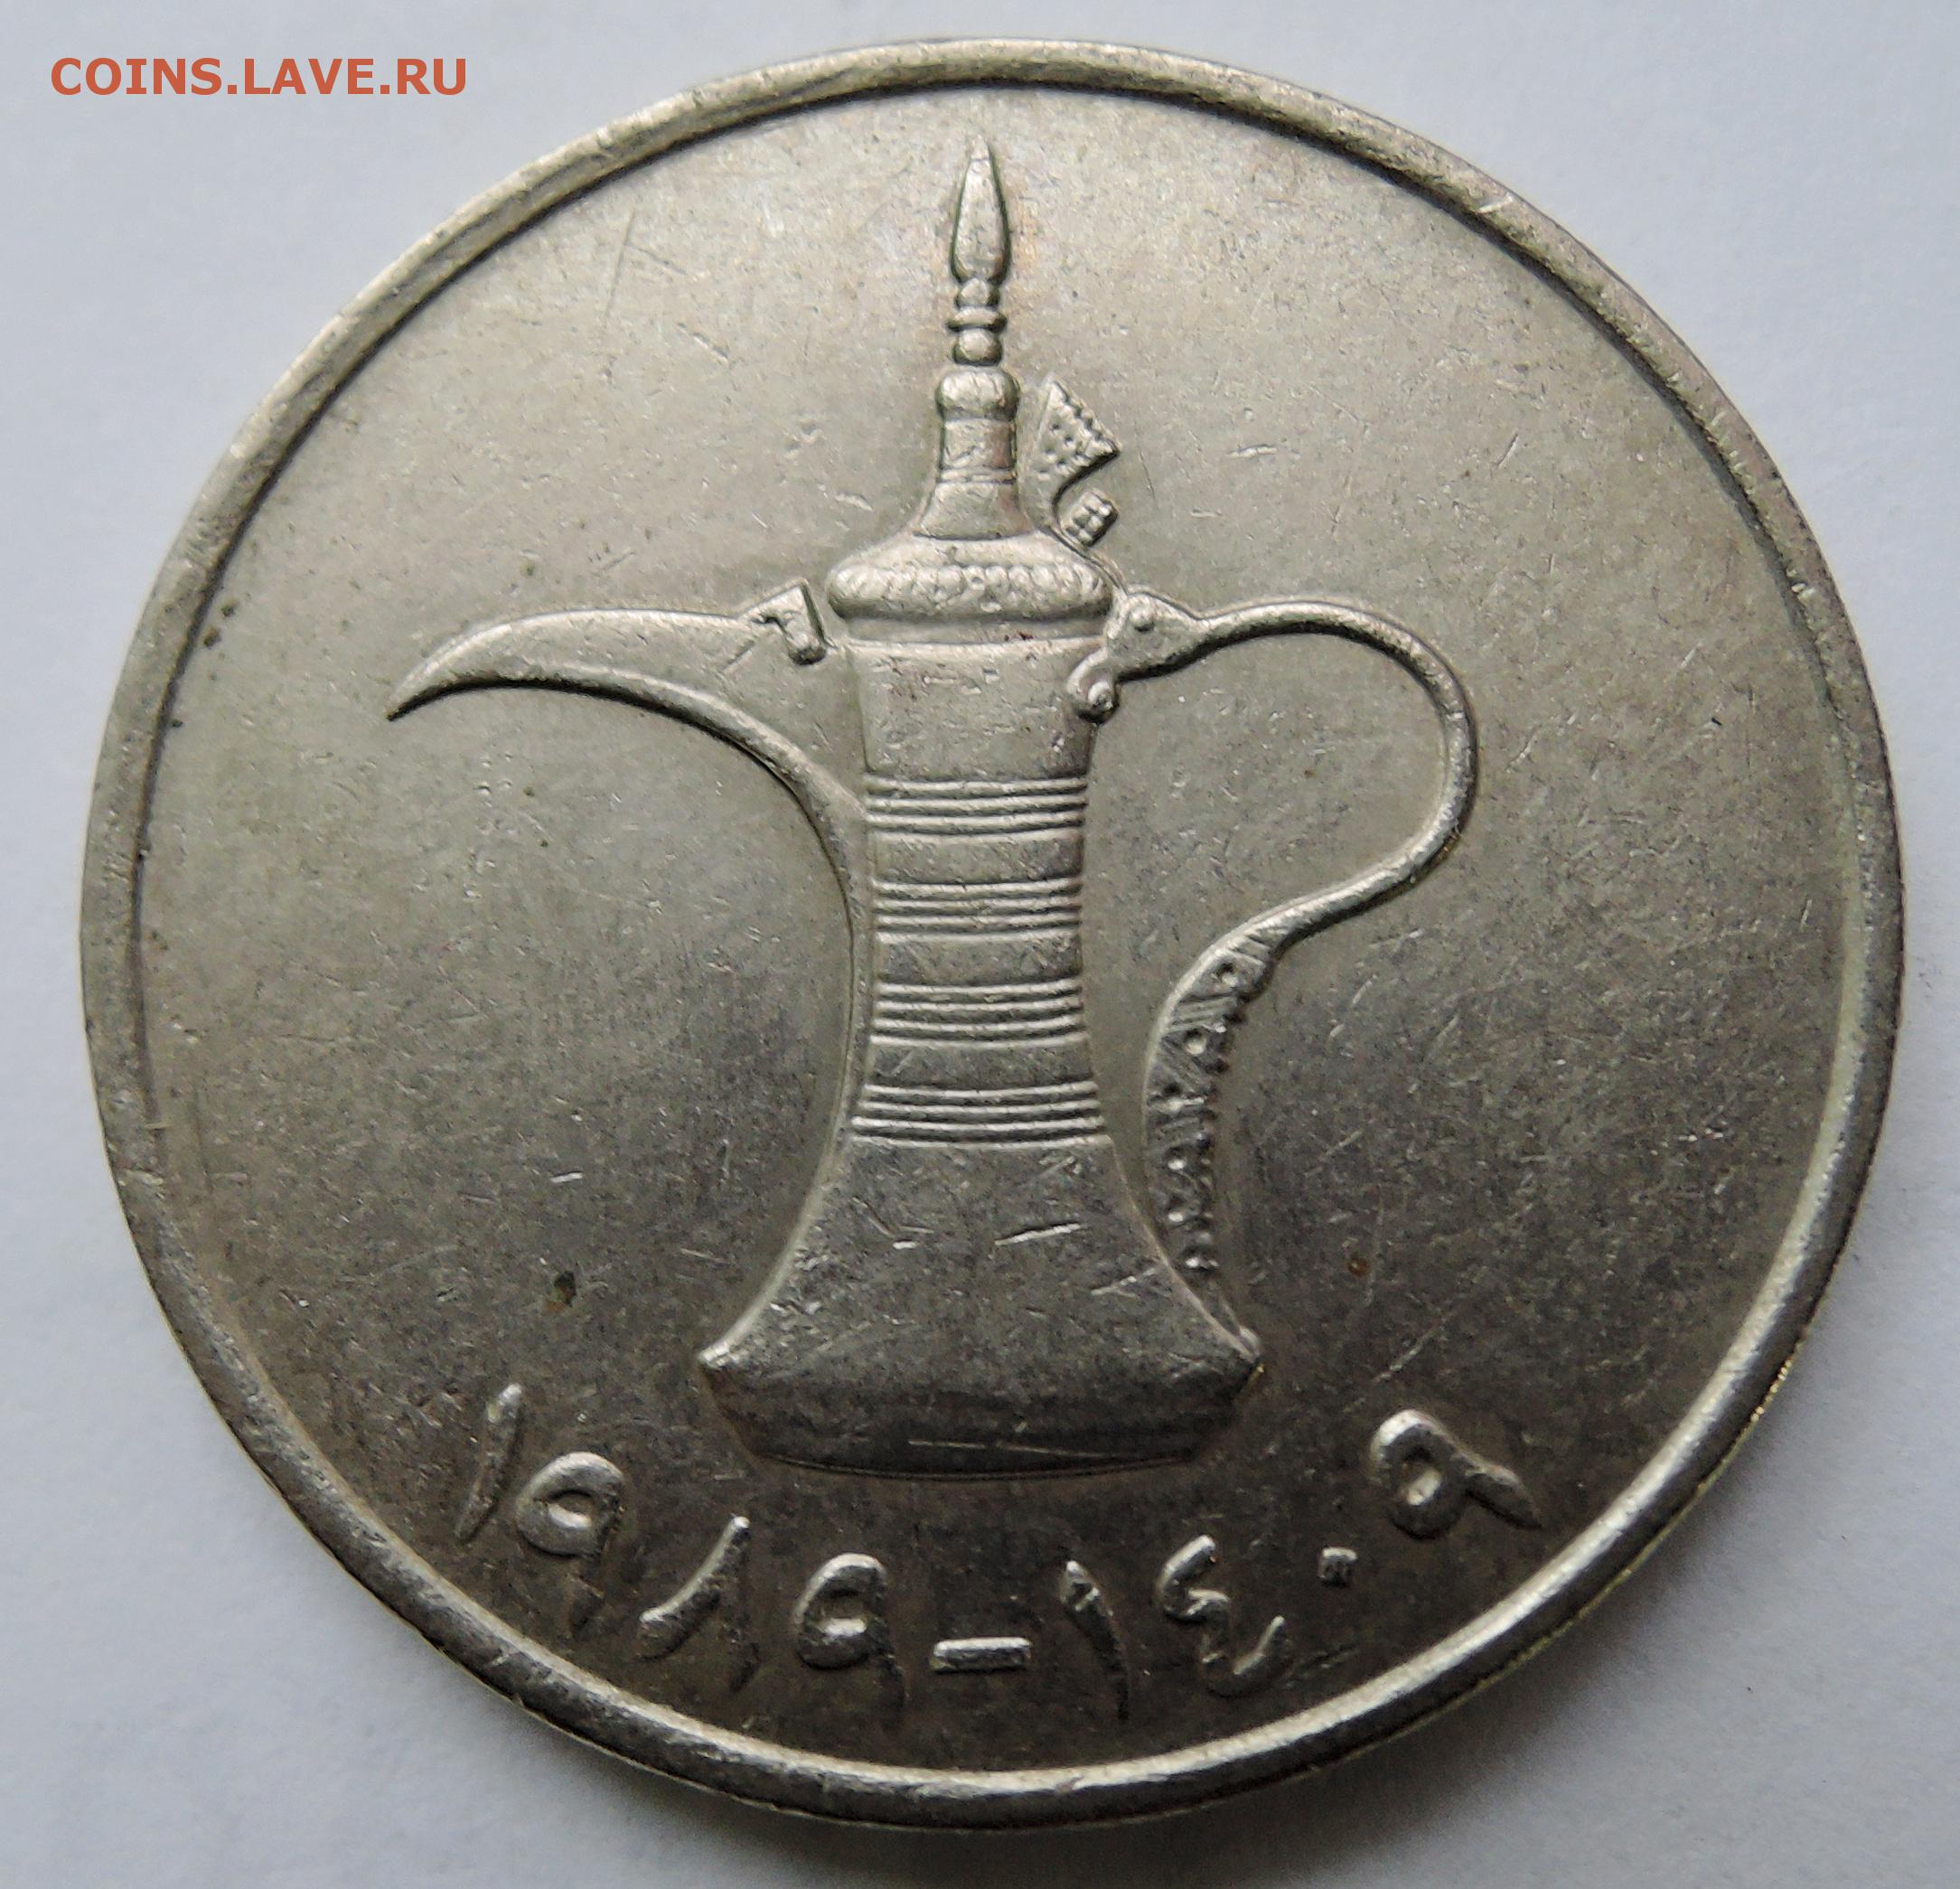 Где купить дирхам оаэ. ОАЭ 1 дирхам 2012. Монеты ОАЭ 1 дирхам. Арабская монета 5 дирхам. Значок дирхама ОАЭ.